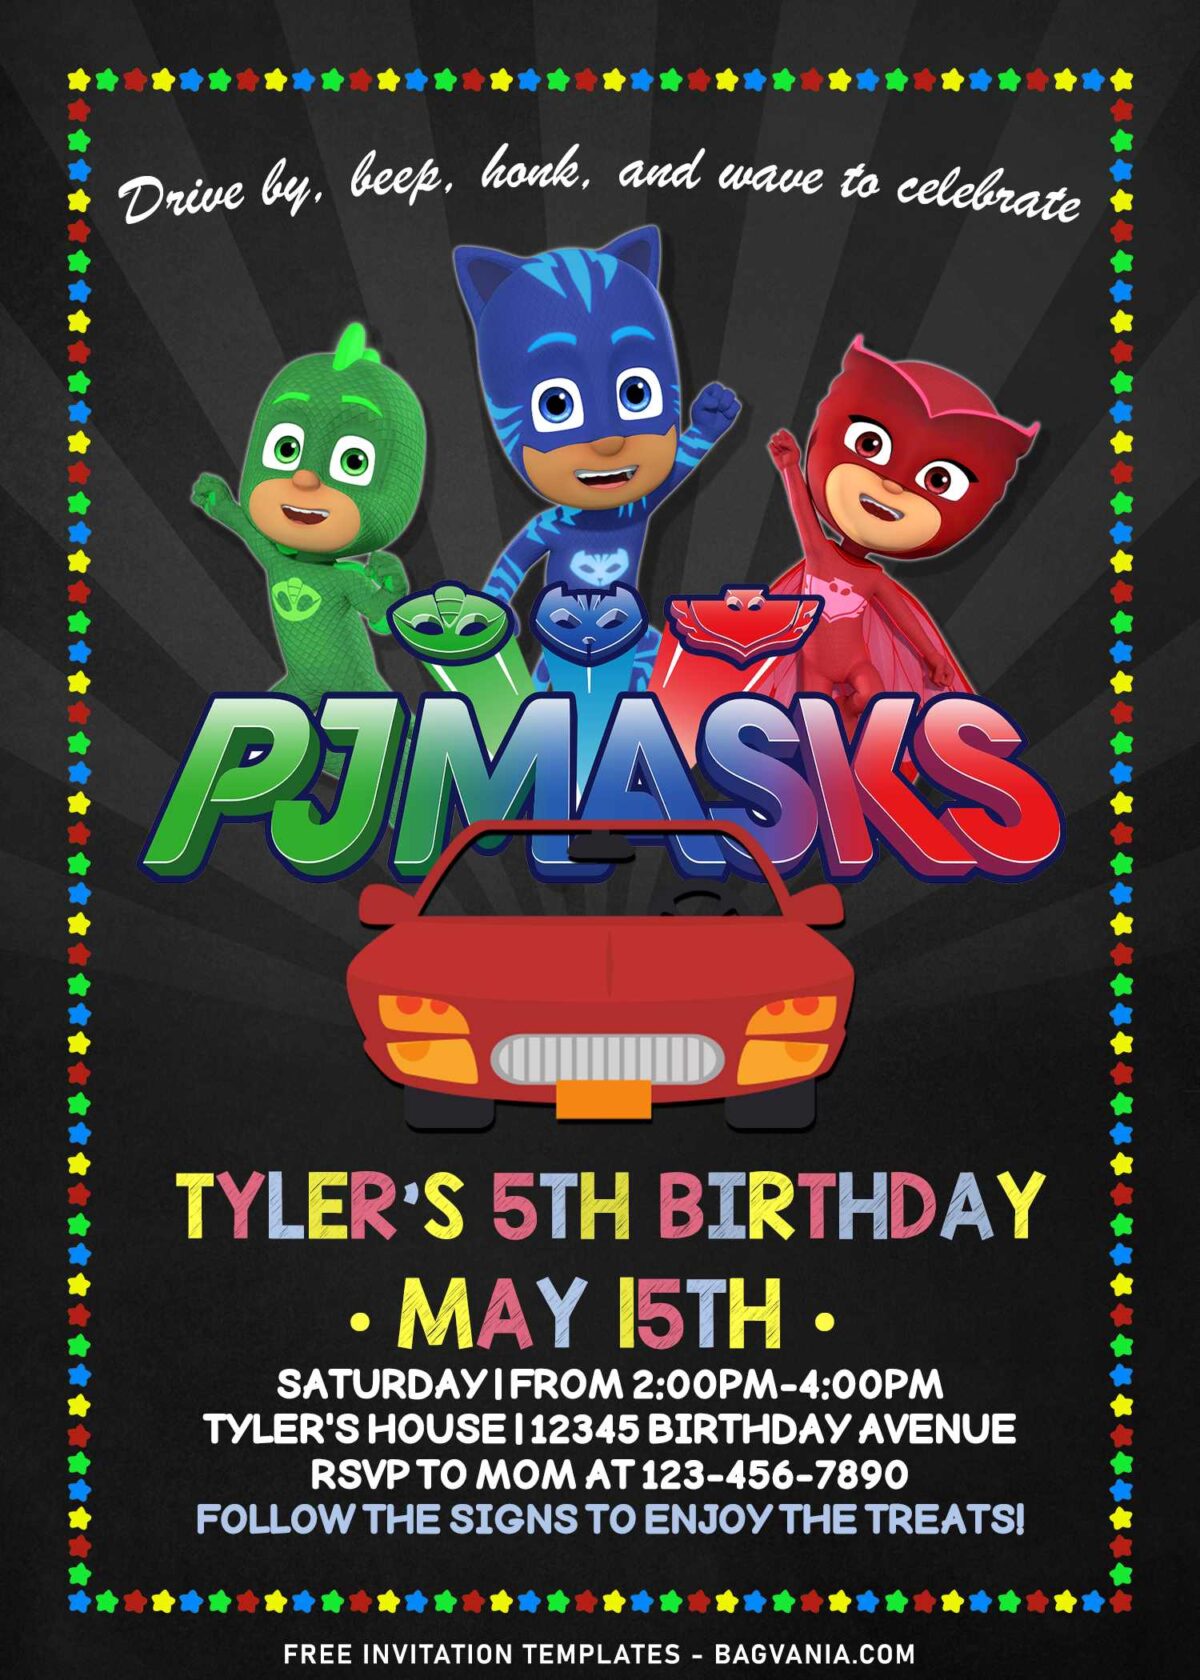 7+ Drive Honk And Wave PJ Masks Birthday Invitation Templates